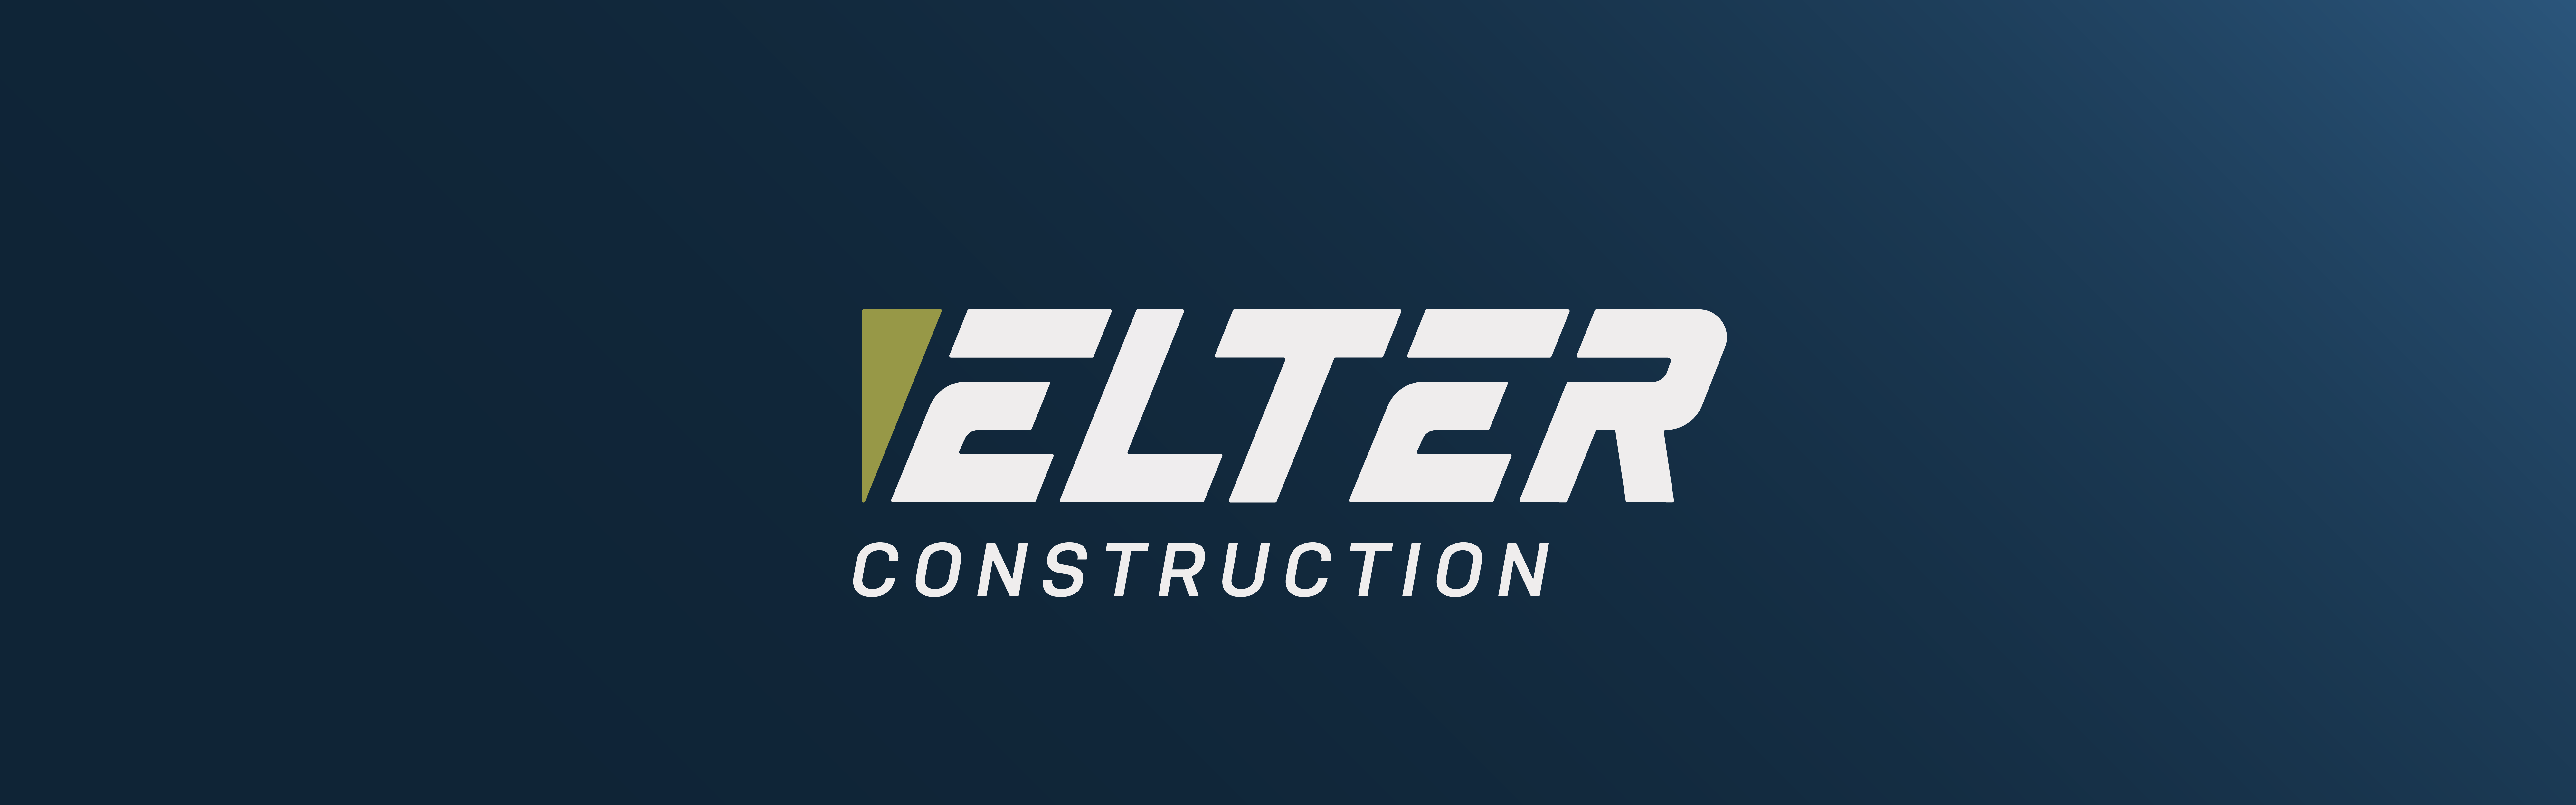 Elter Construction logo design